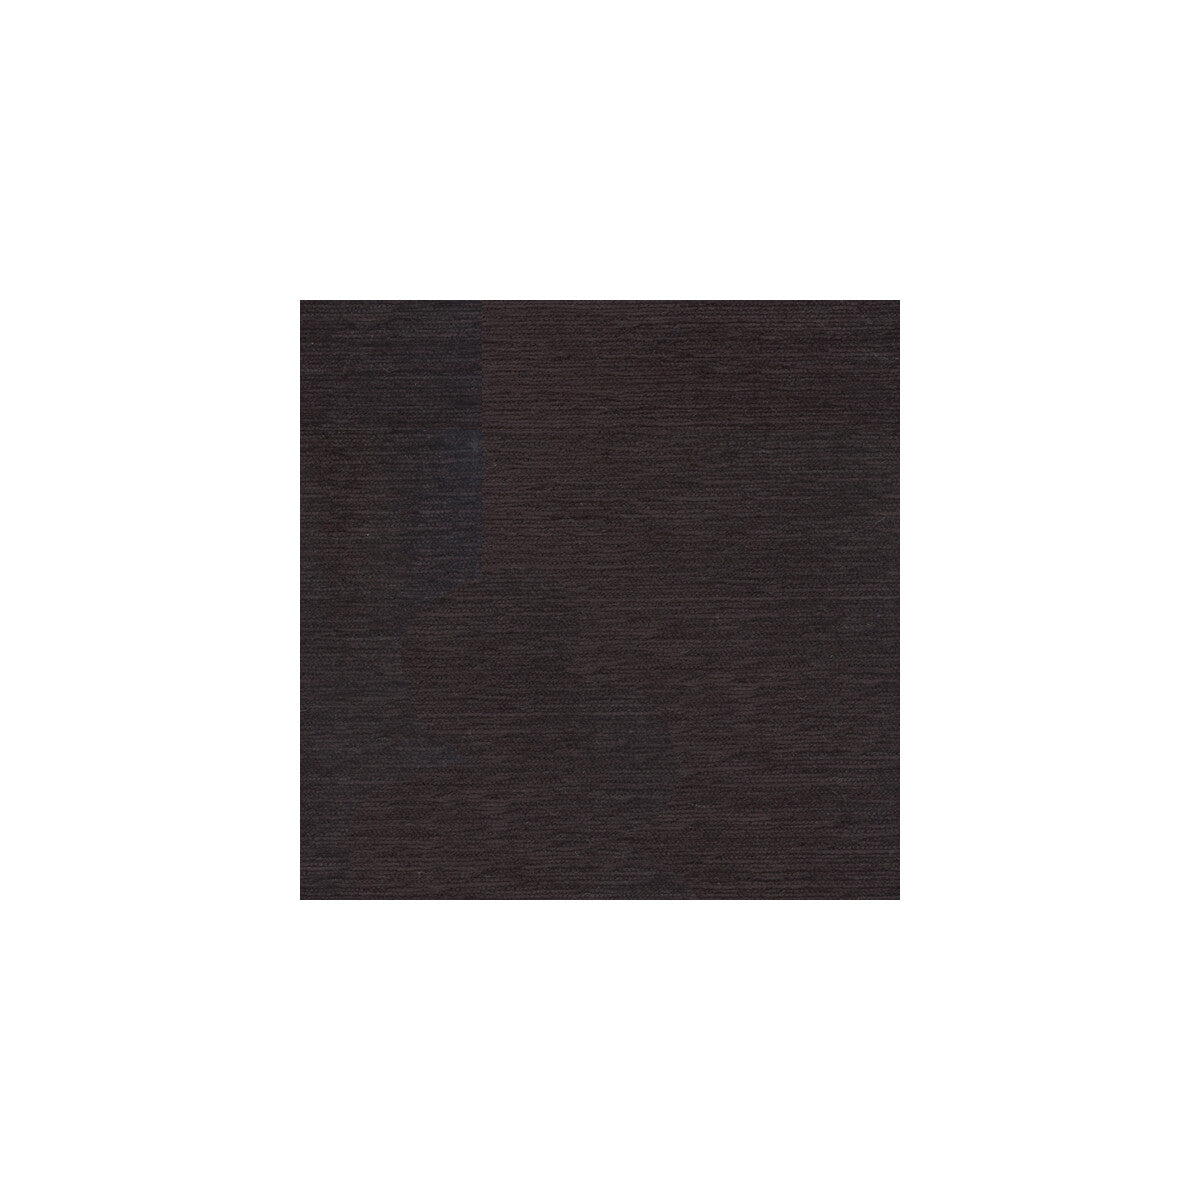 Kravet Smart fabric in 33001-8 color - pattern 33001.8.0 - by Kravet Smart